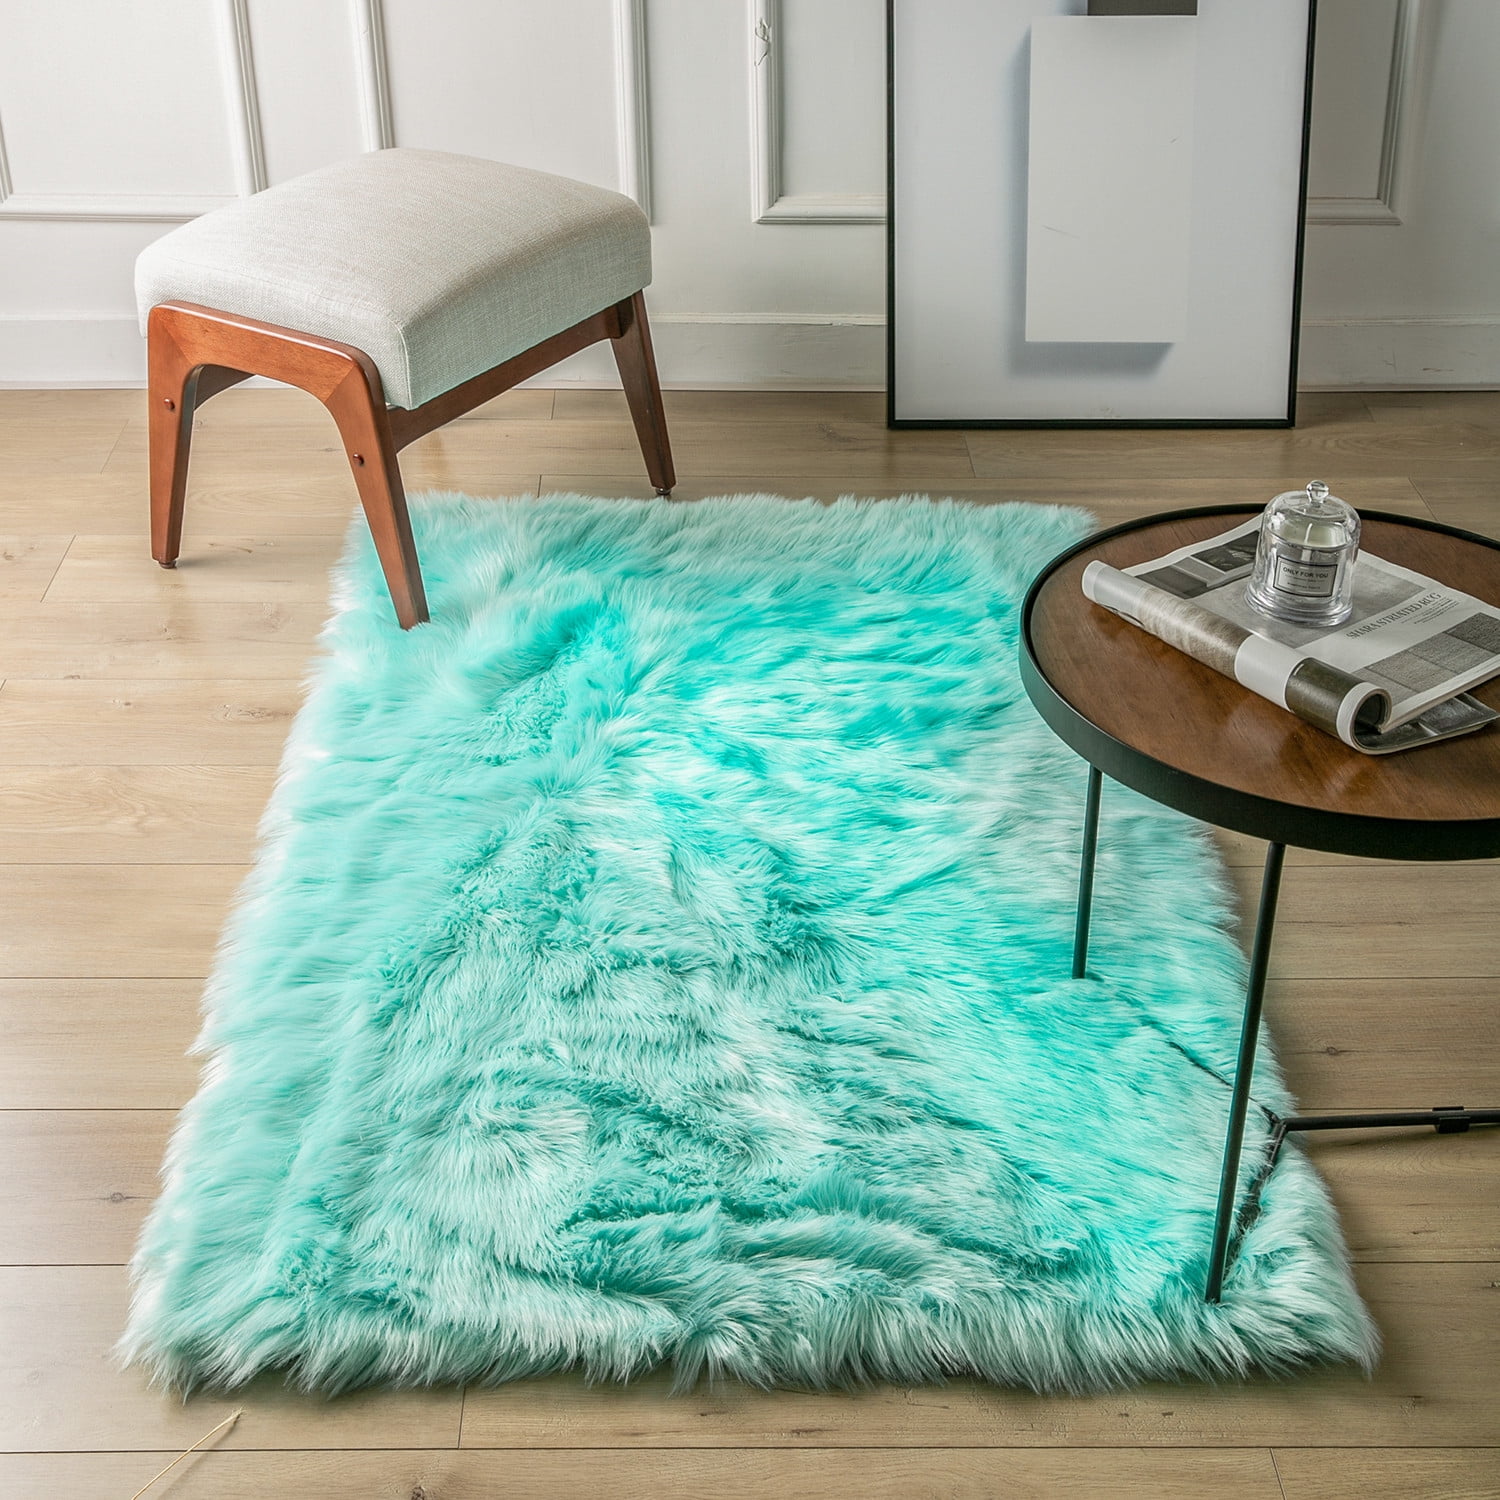 Faux fur rugs teal turquoise sheepskin flokati rectangle baby nursery area rugs 